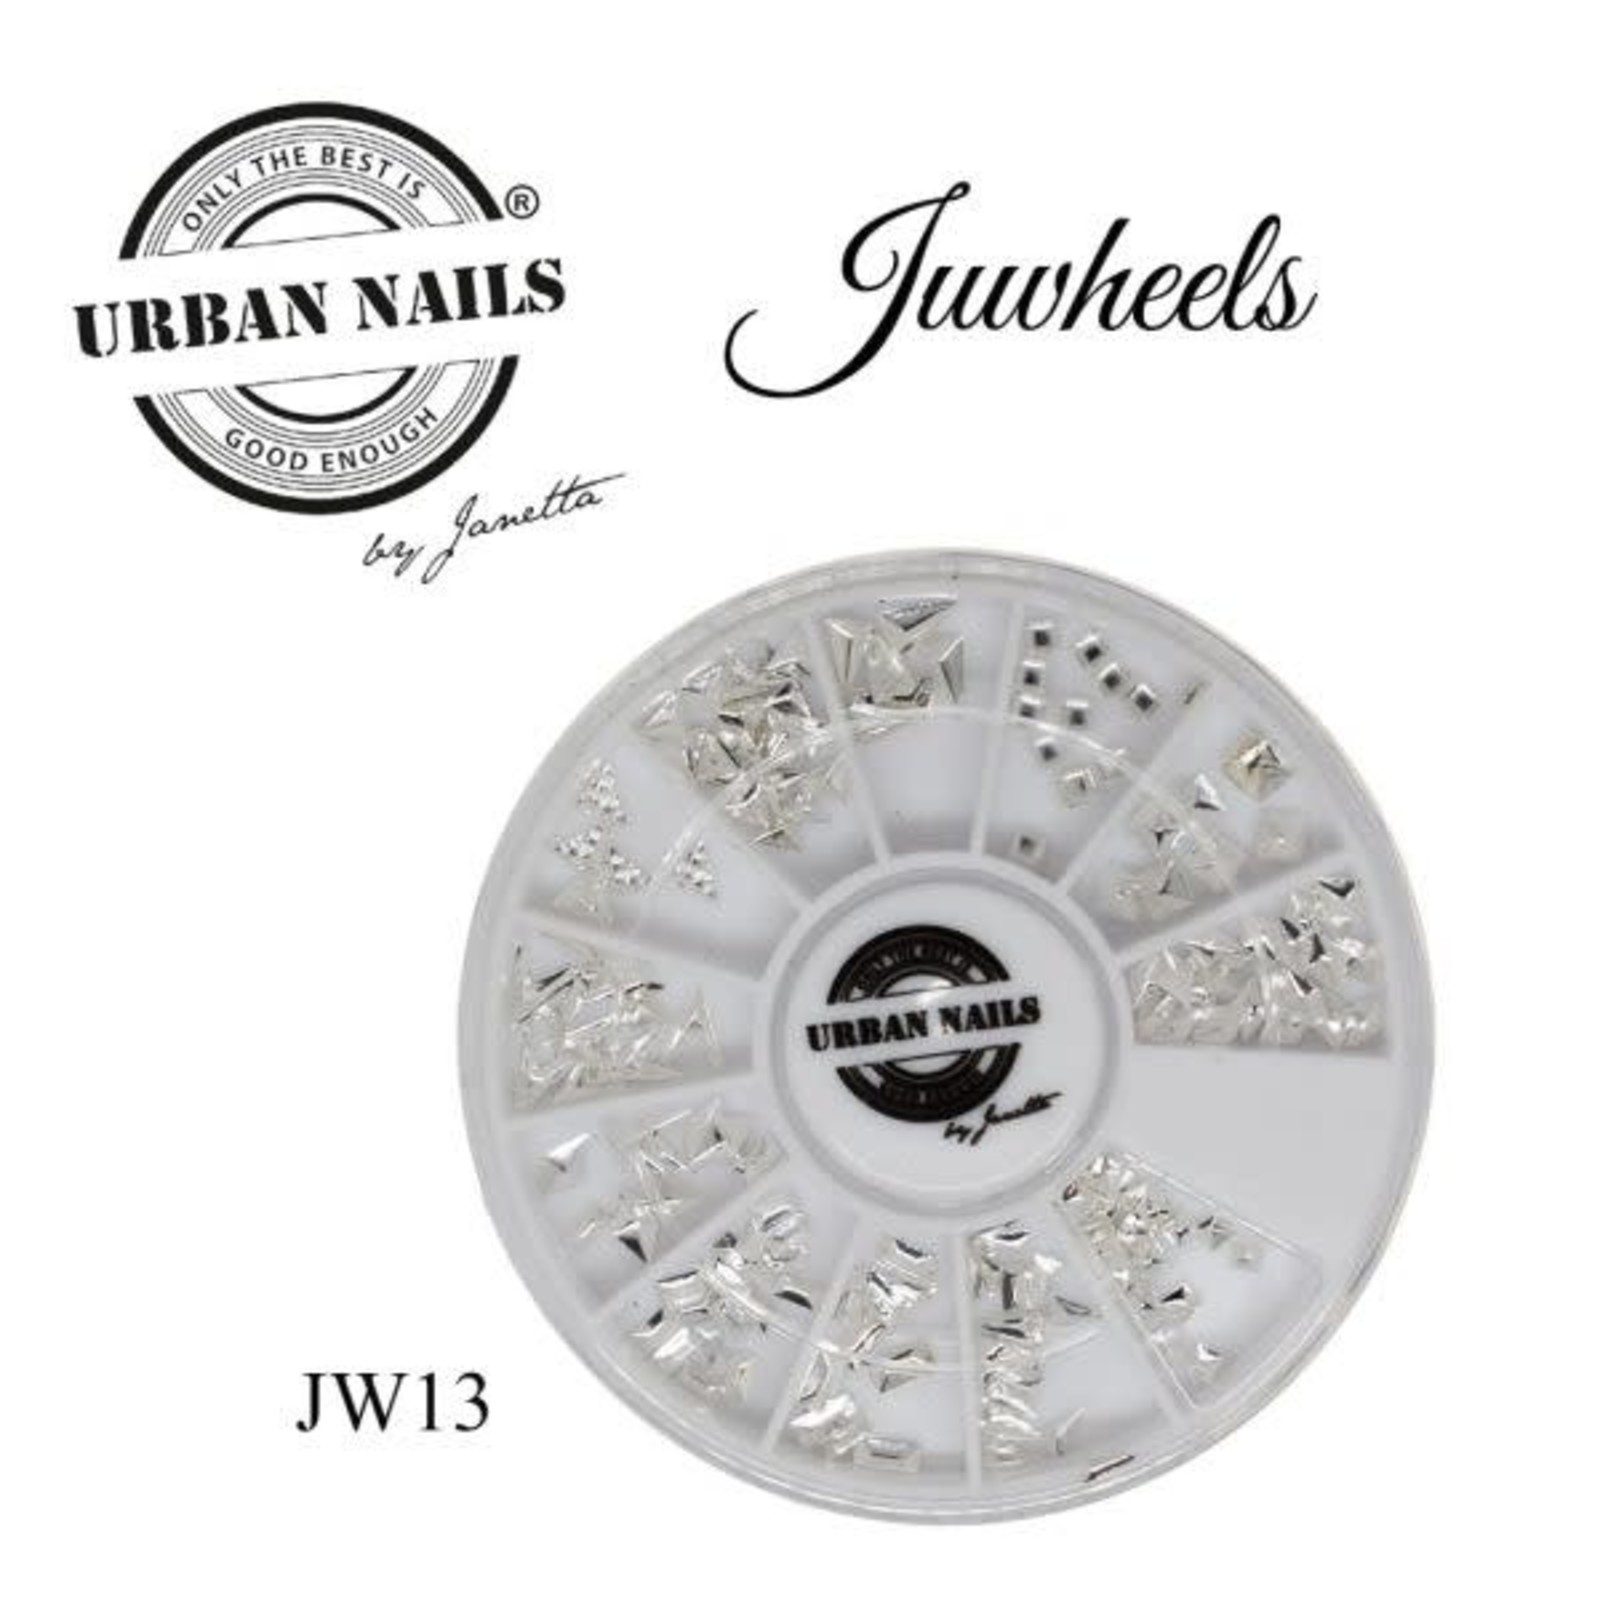 Urban nails Juwheels 13